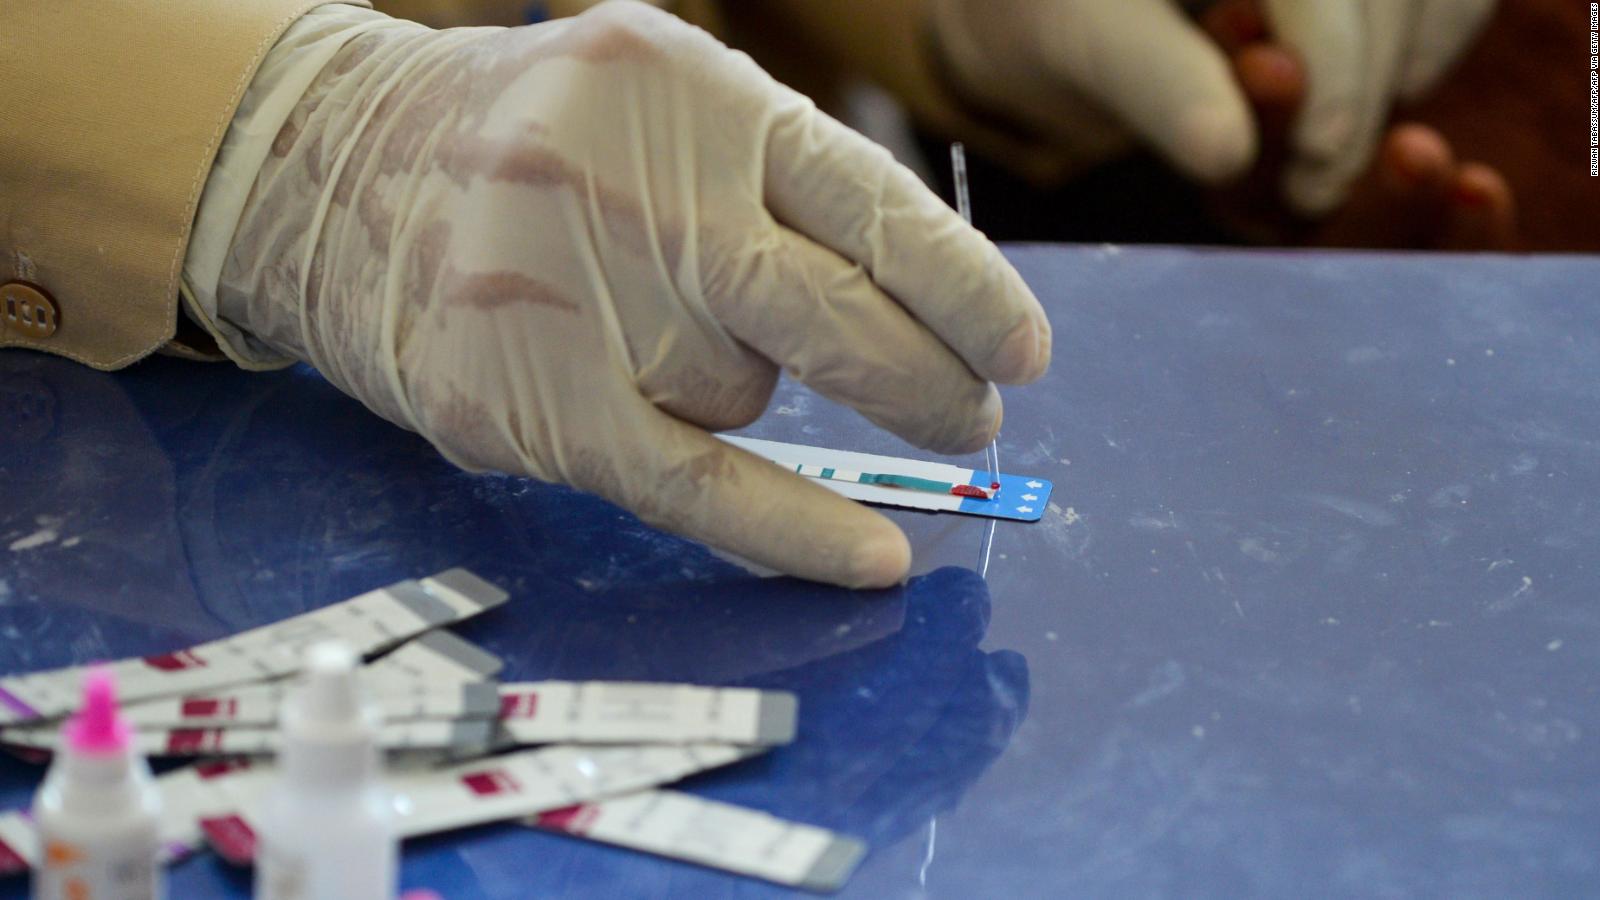 Ratodero Hiv Outbreak Reuse Of Needles In Pakistan Made This Crisis Inevitable Cnn